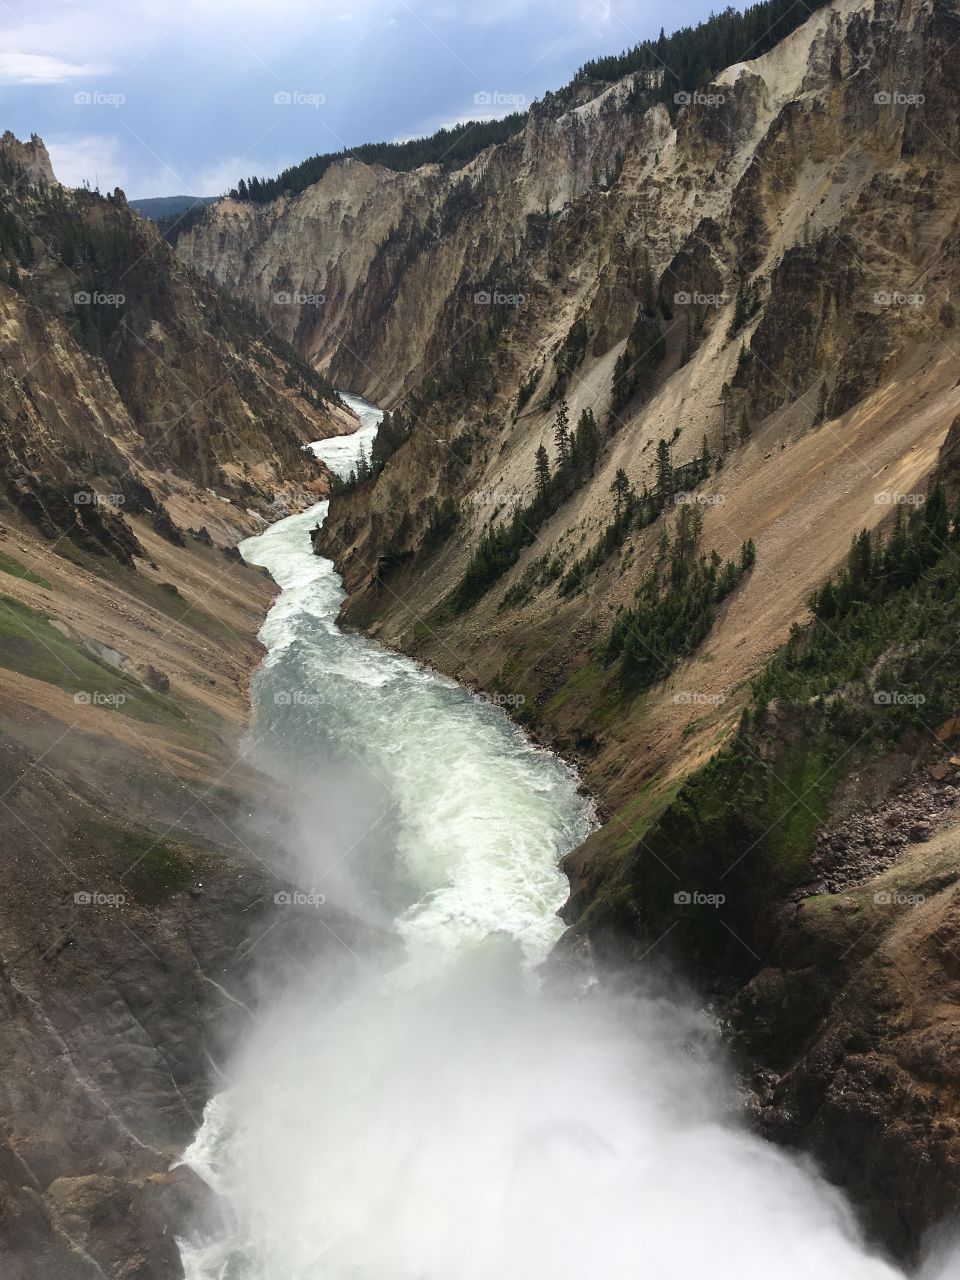 Yellowstone River rushing through the Grand Canyon of Yellowstone